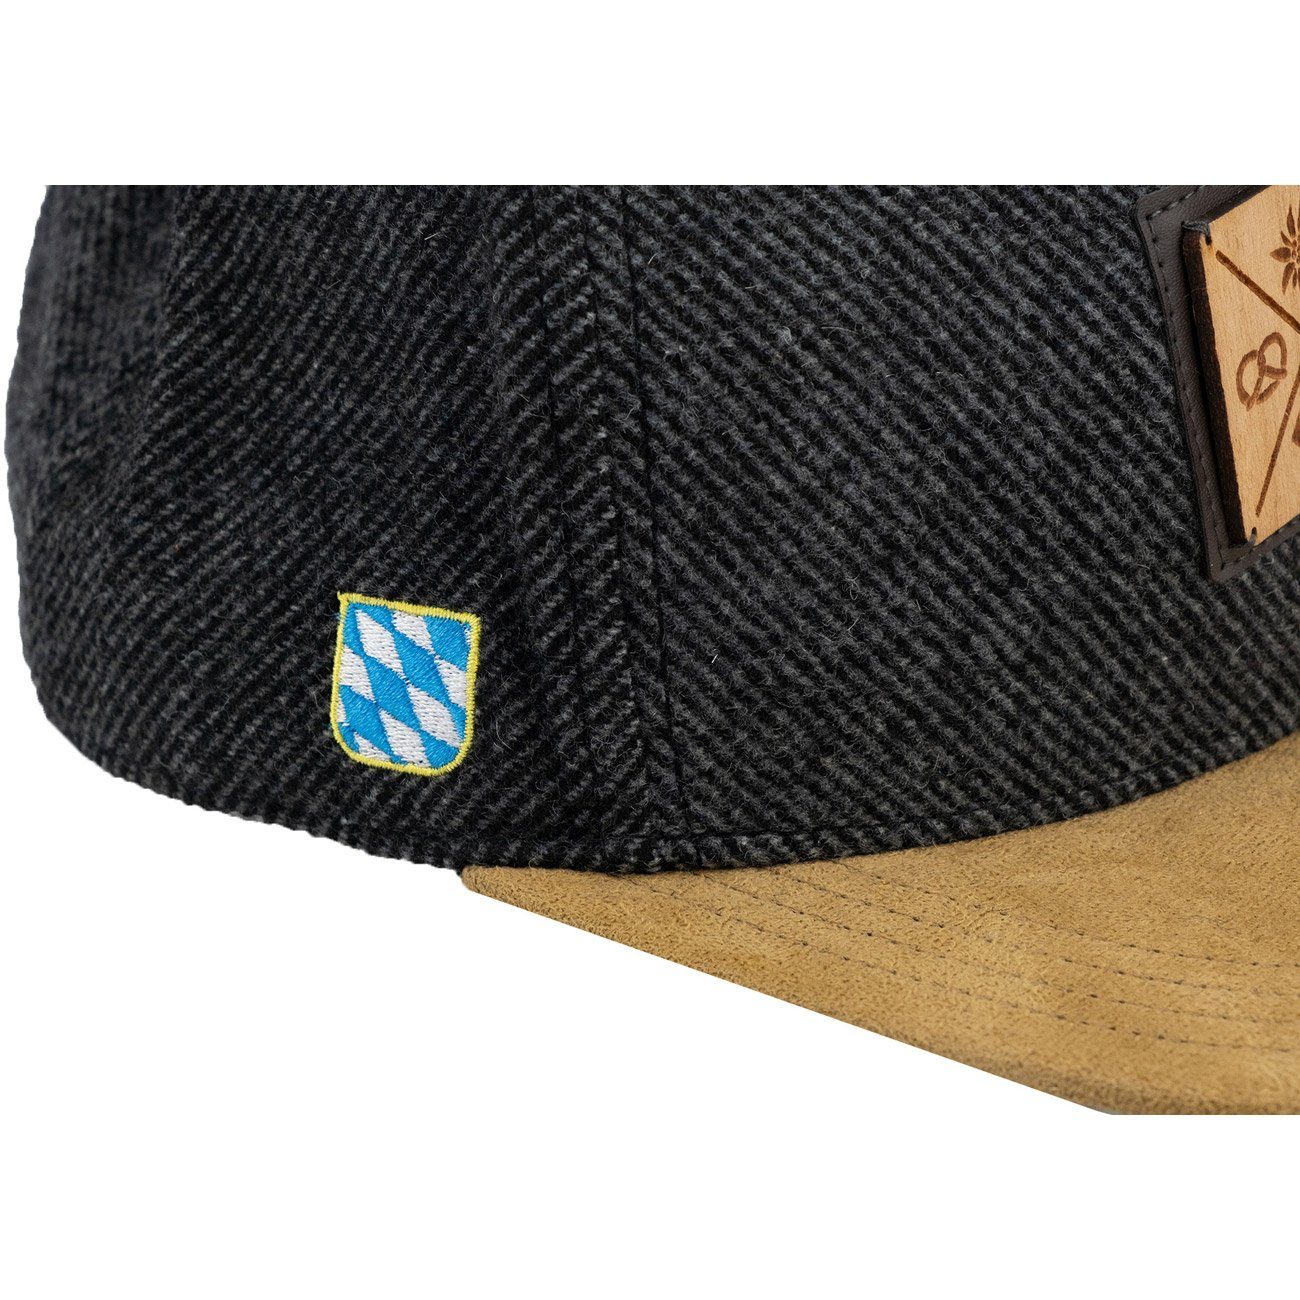 Kreizweis Caps Bavarian Altbayern Baseball Cap